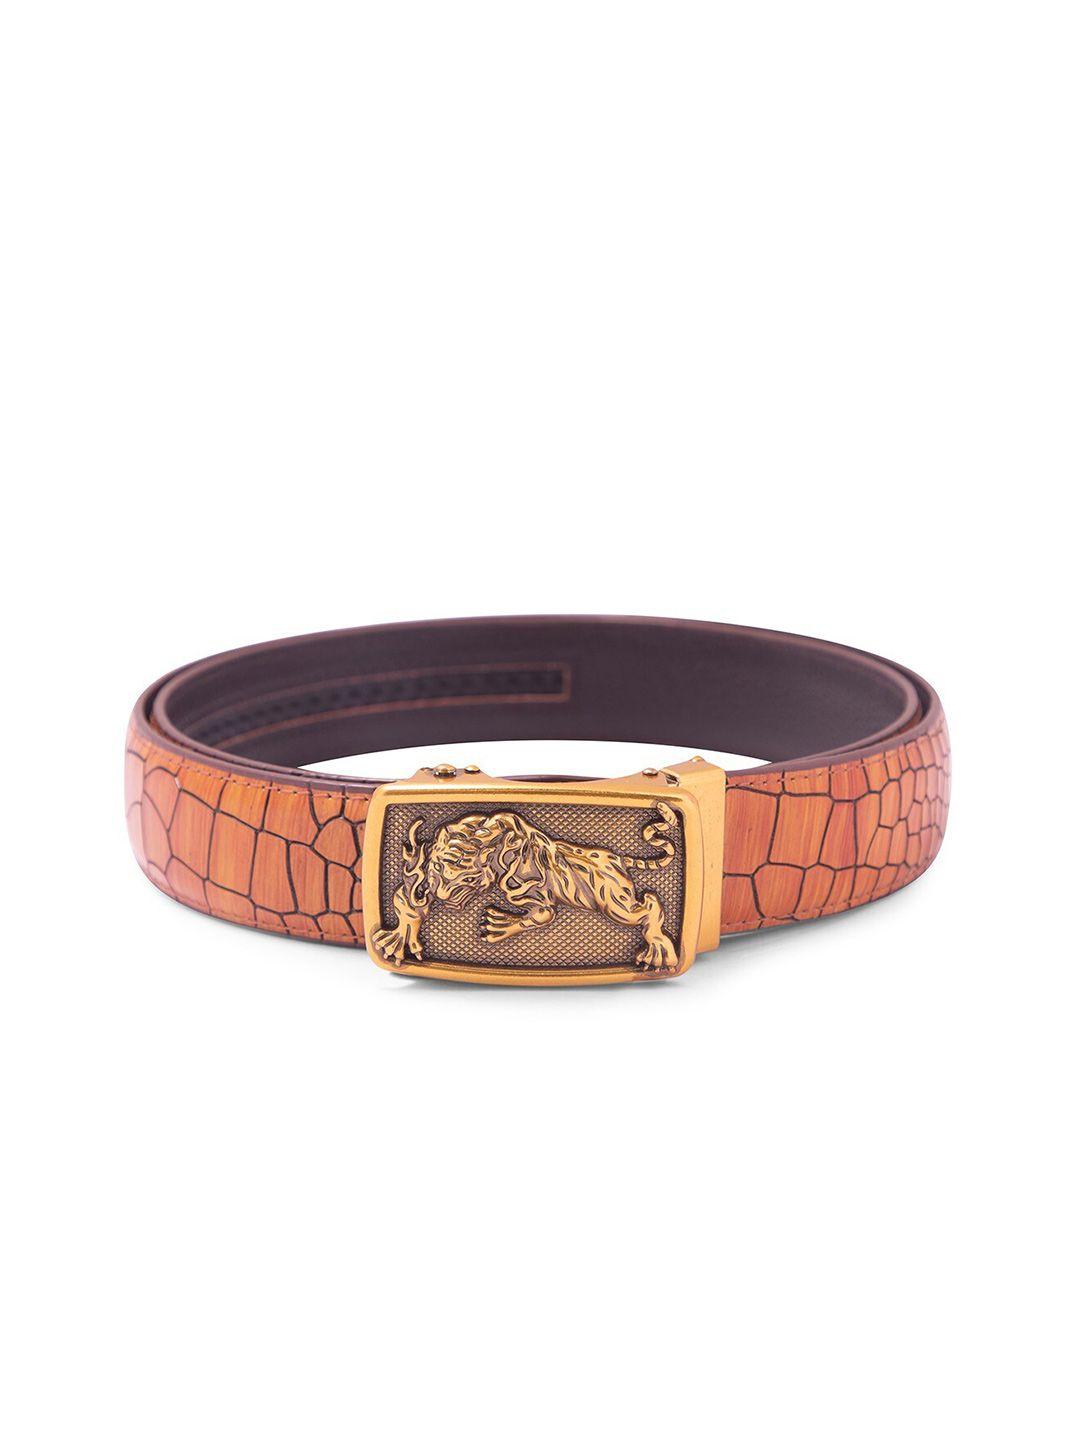 bange men orange textured leather belt with bronze buckle